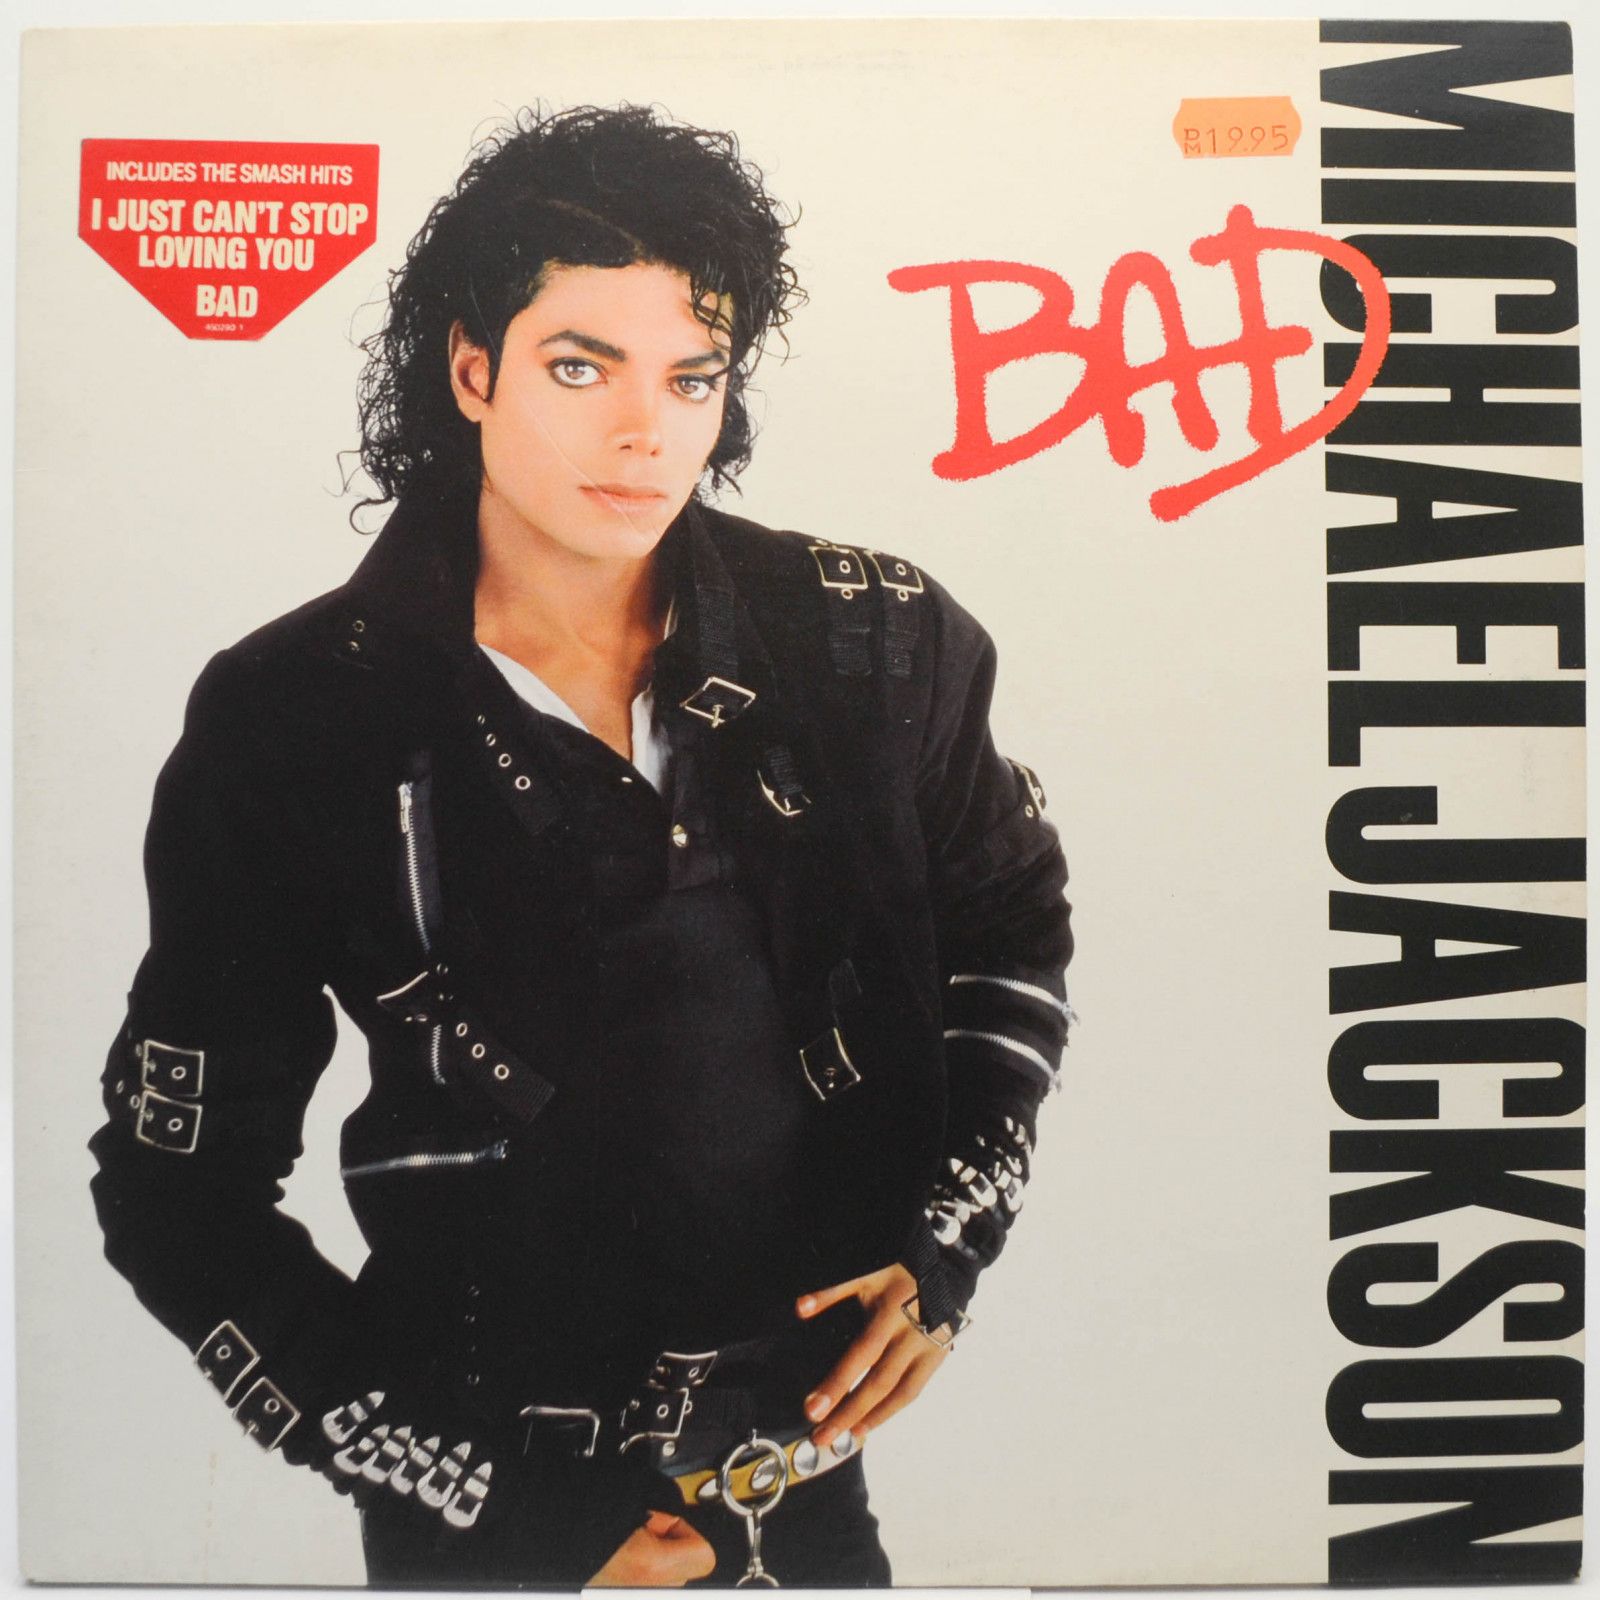 Michael Jackson — Bad, 1987